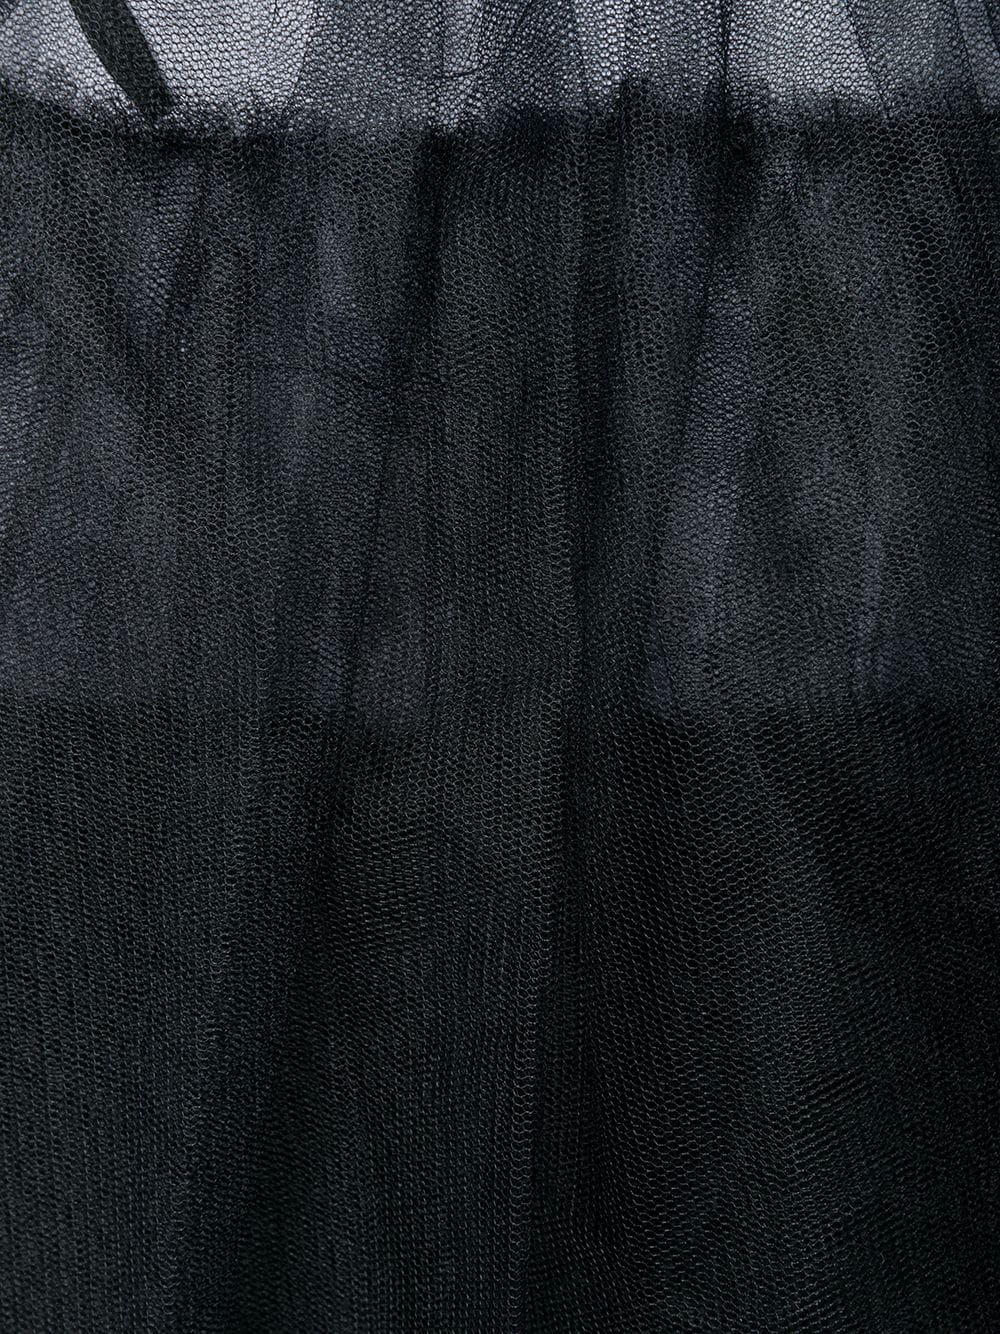 фото Simone rocha прозрачная юбка с оборками